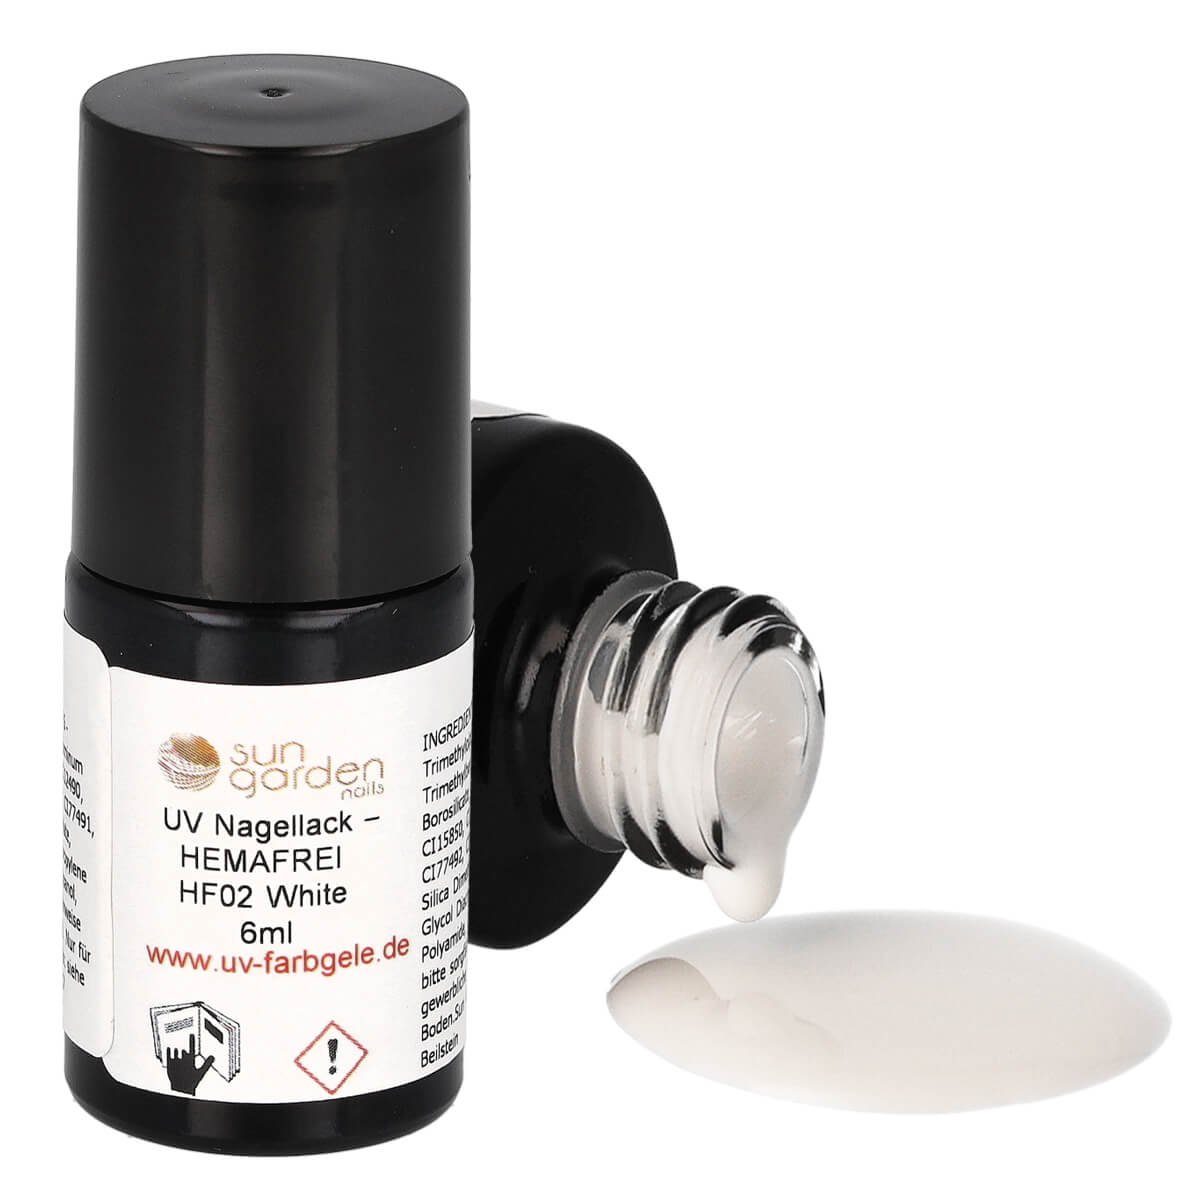 Sun Garden White 6ml HEMAFREI Nagellack - HF02 – UV Nails Nagellack